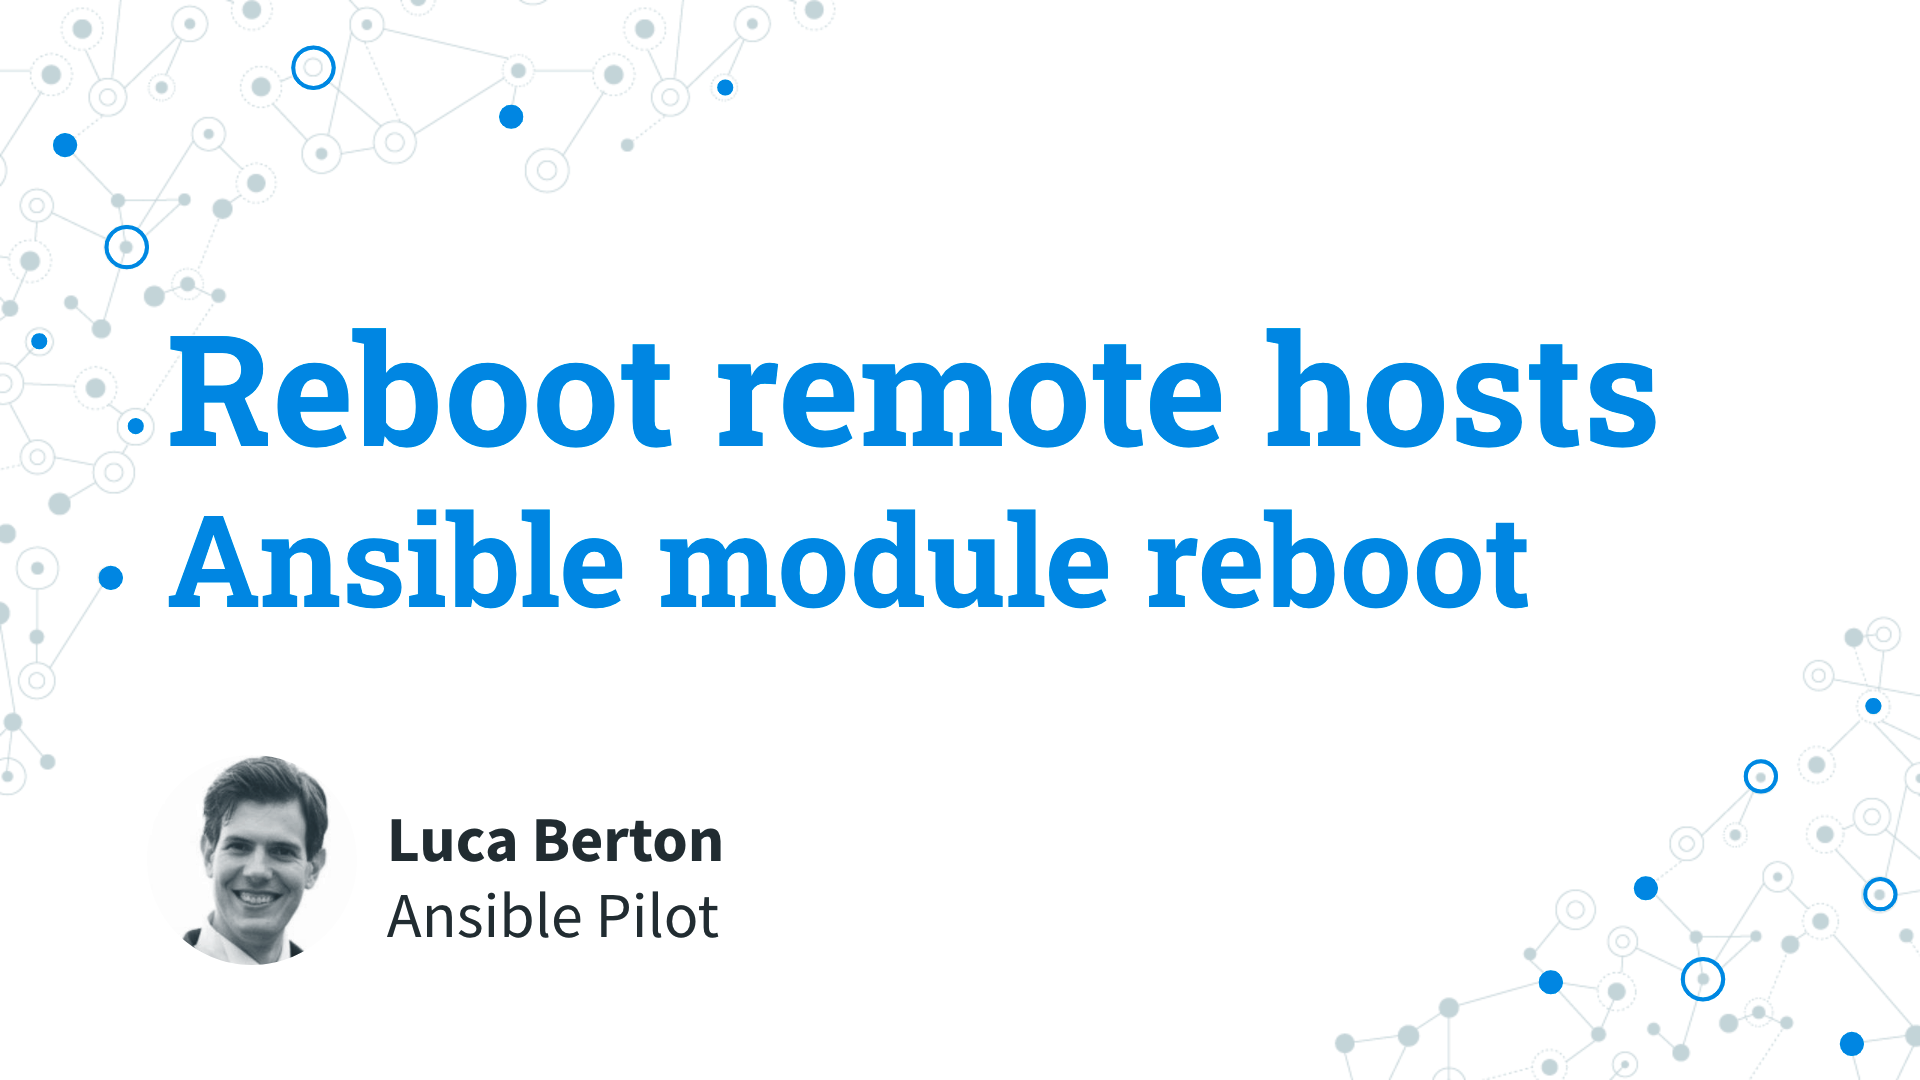 Reboot remote hosts - Ansible module reboot